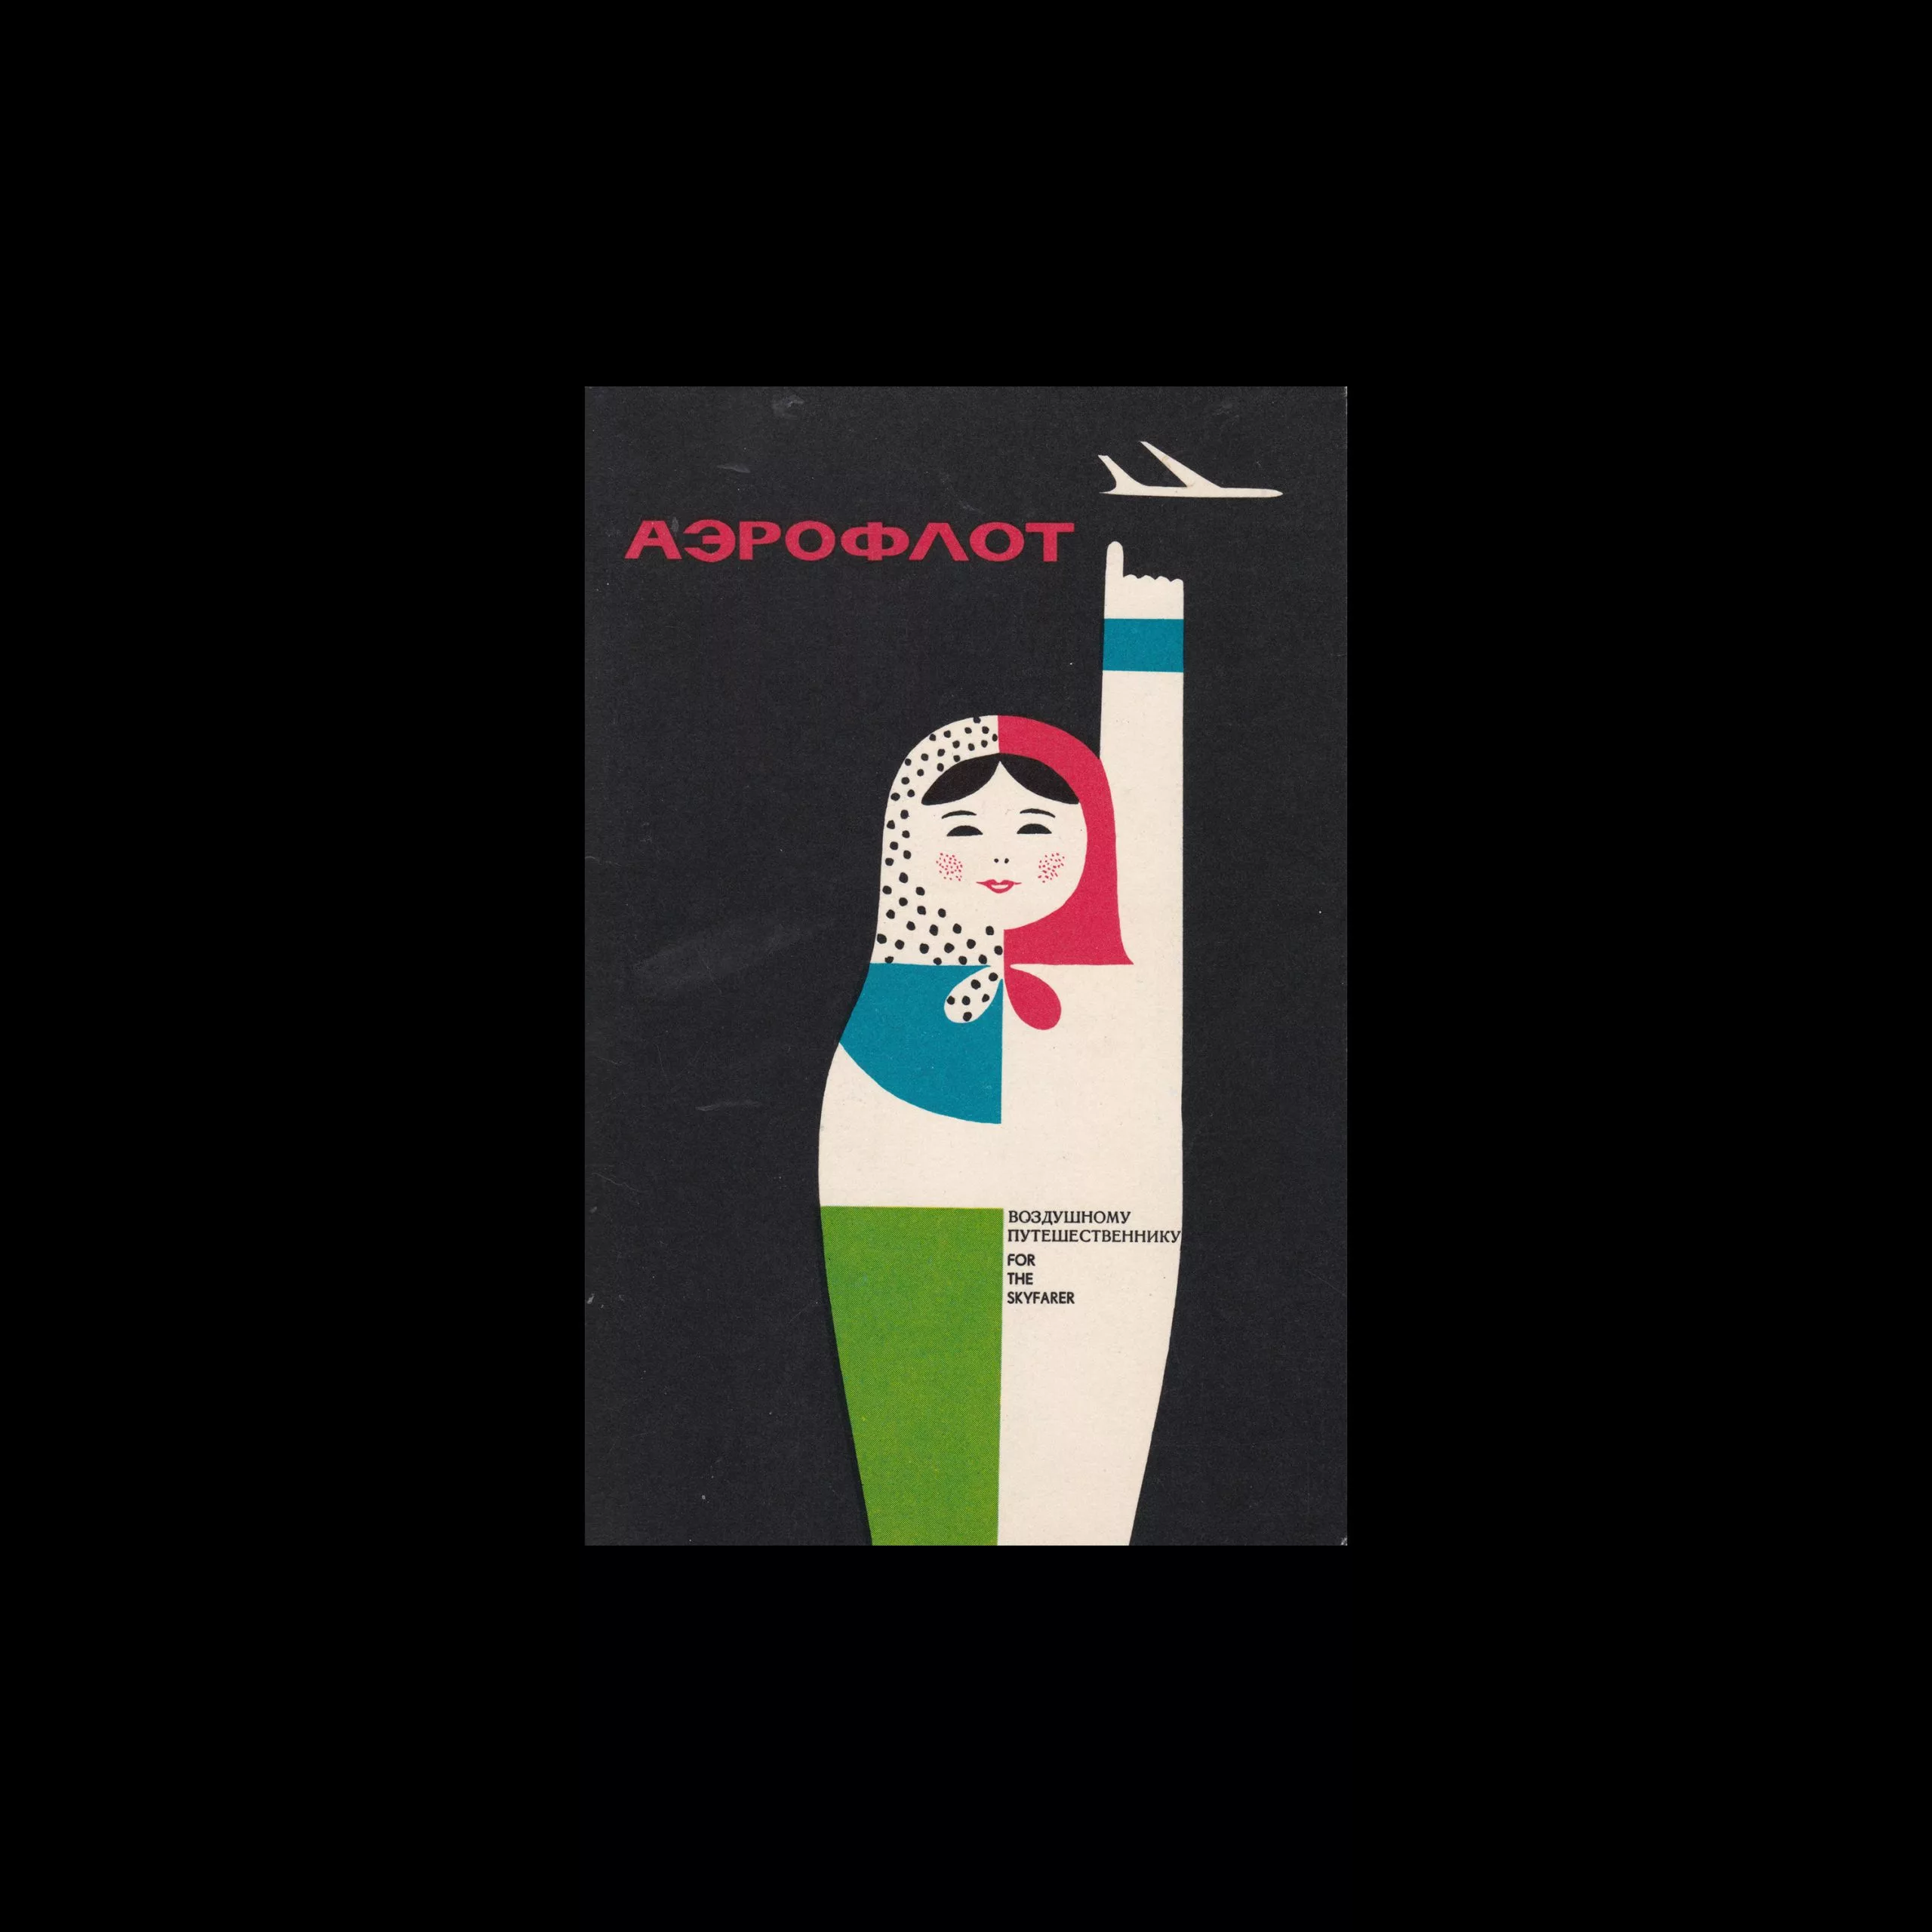 Aeroflot Advertising Booklet and ephemera, 1970s